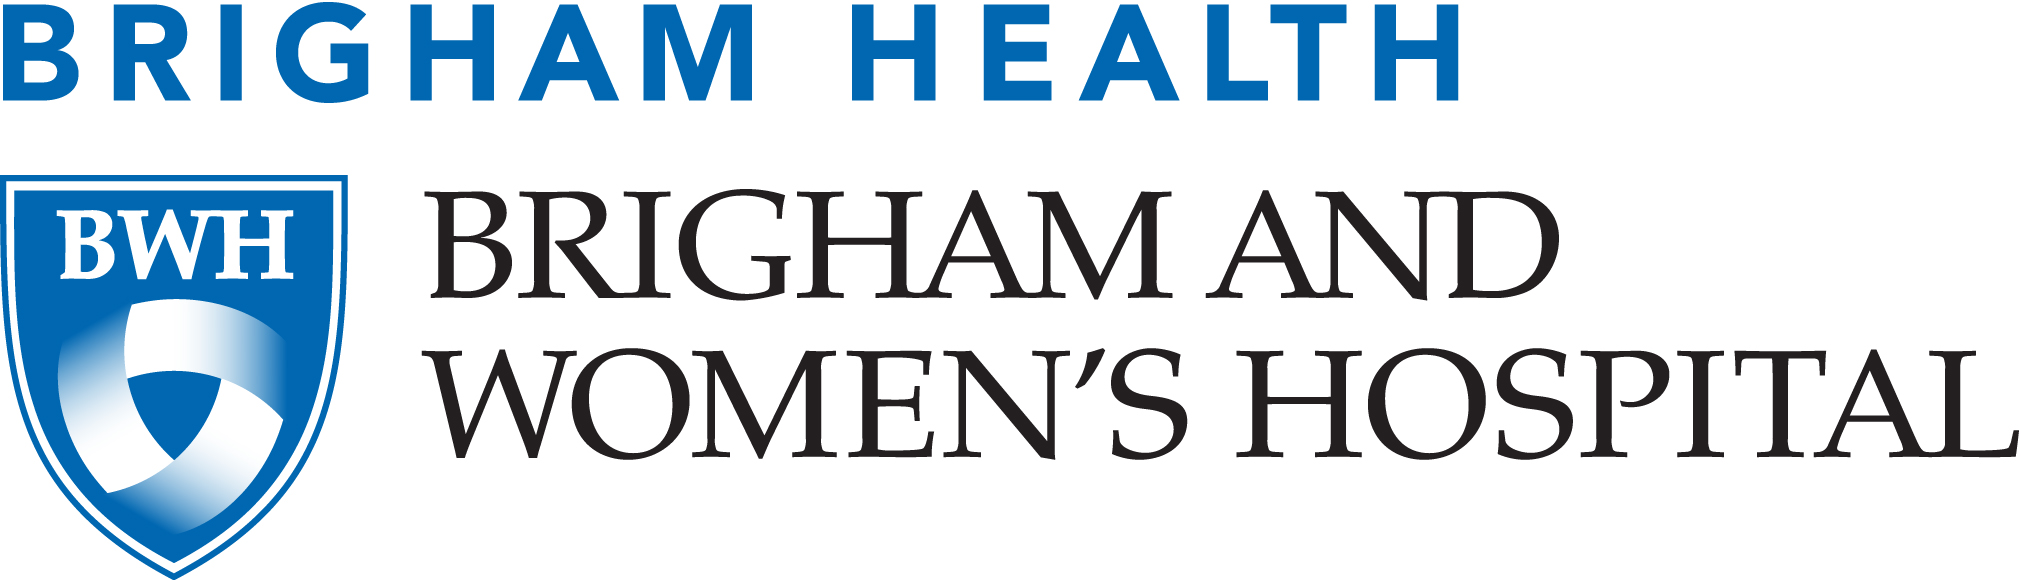 Brigham Health Hospital